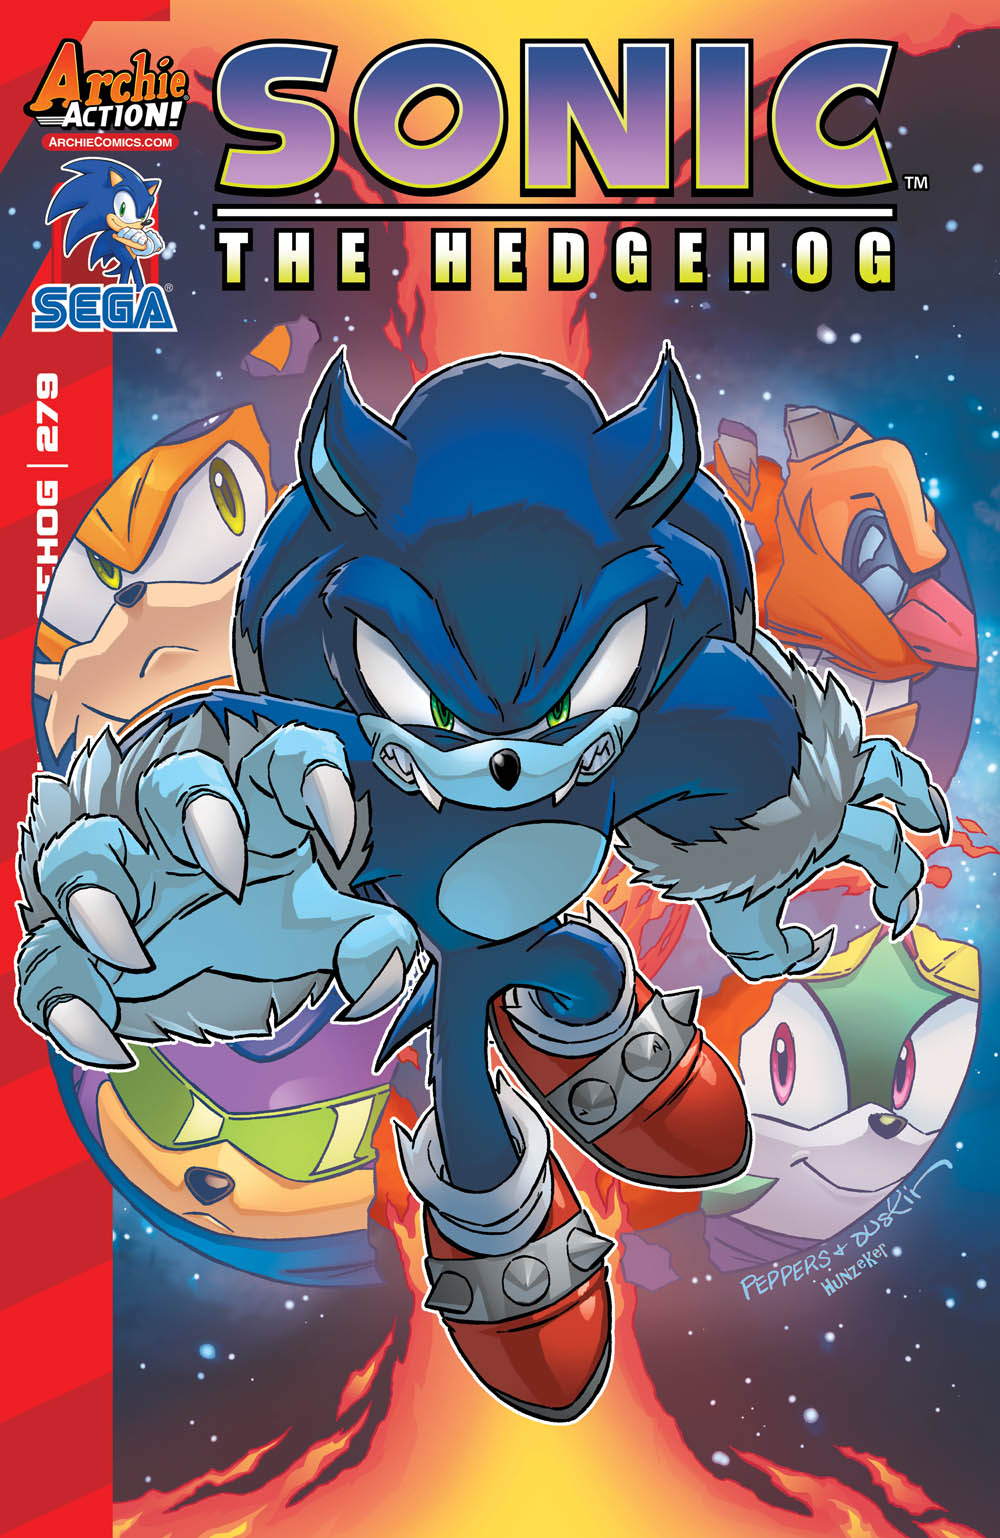 Sonic#279 - Archie Comics